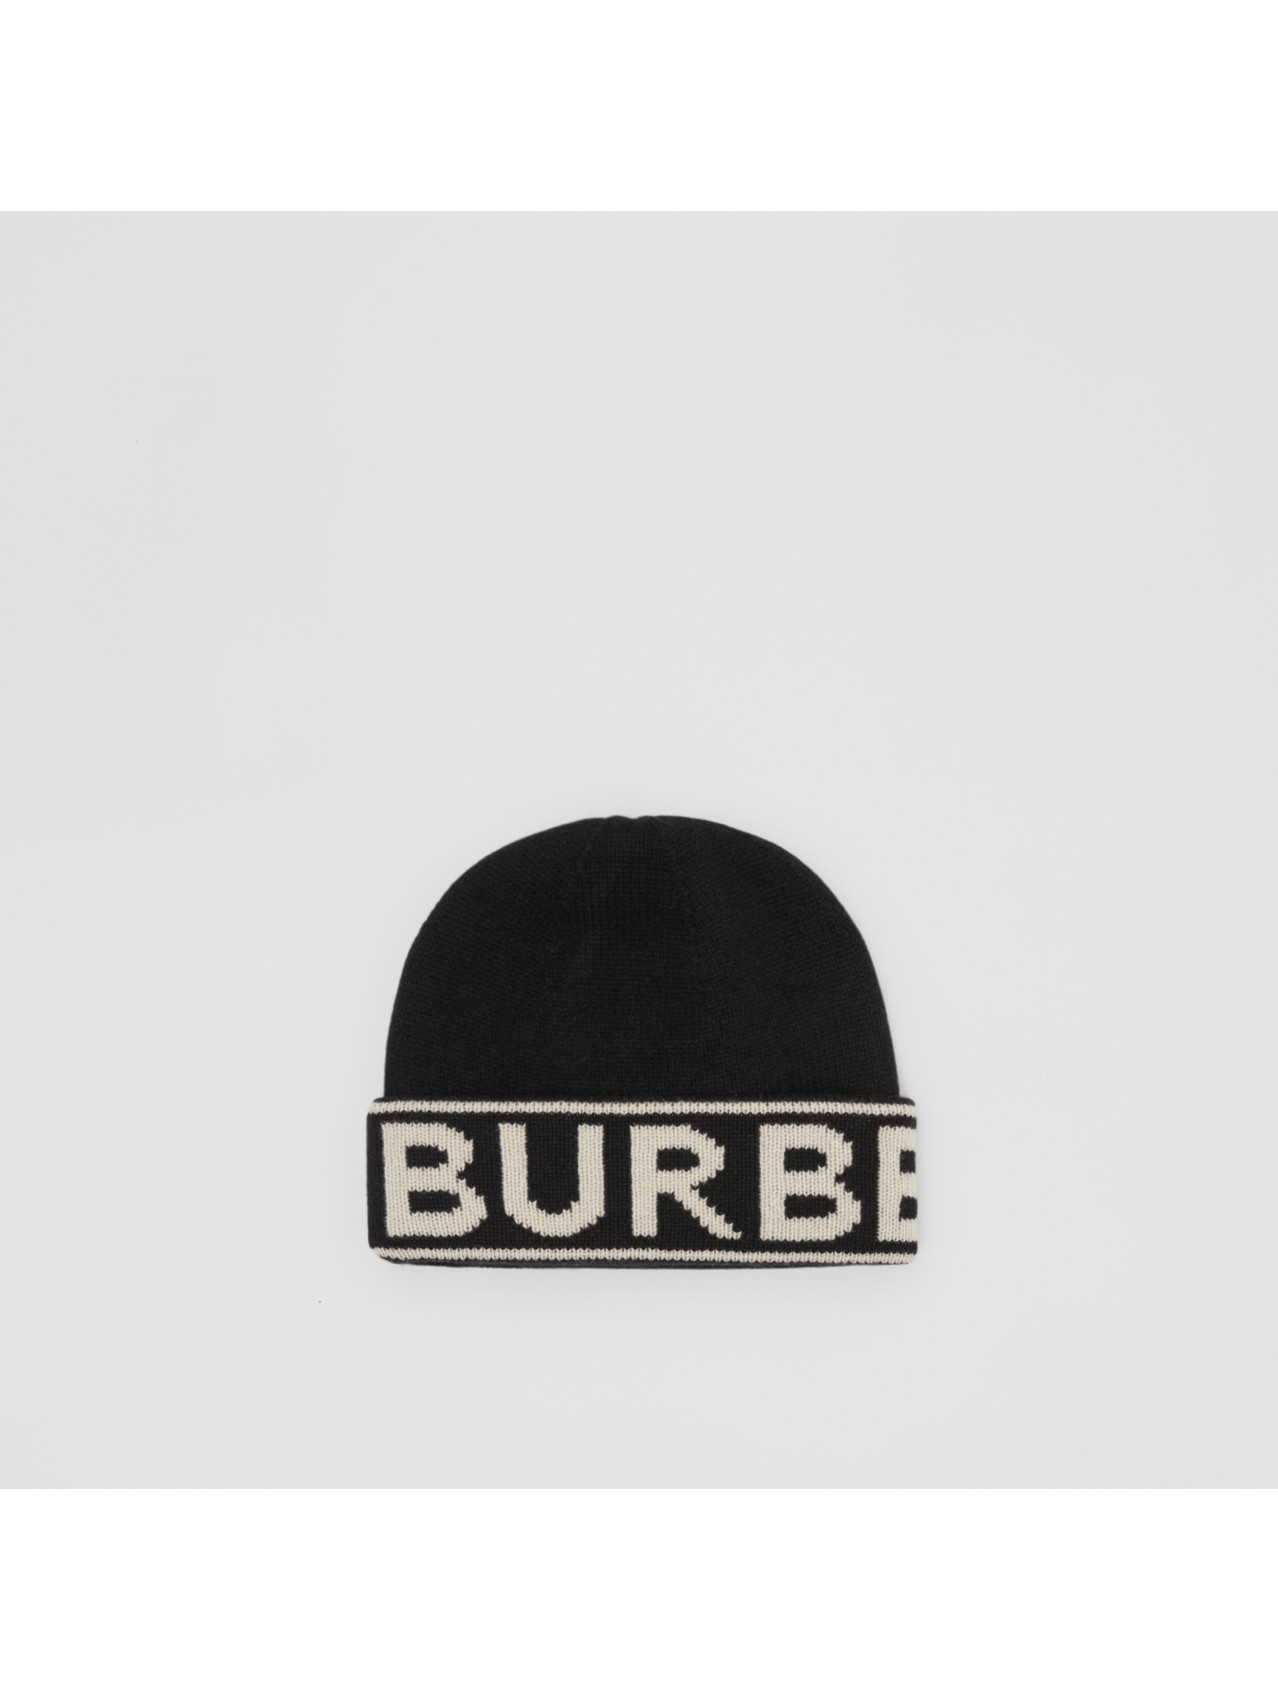 Total 85+ imagen burberry ski hat